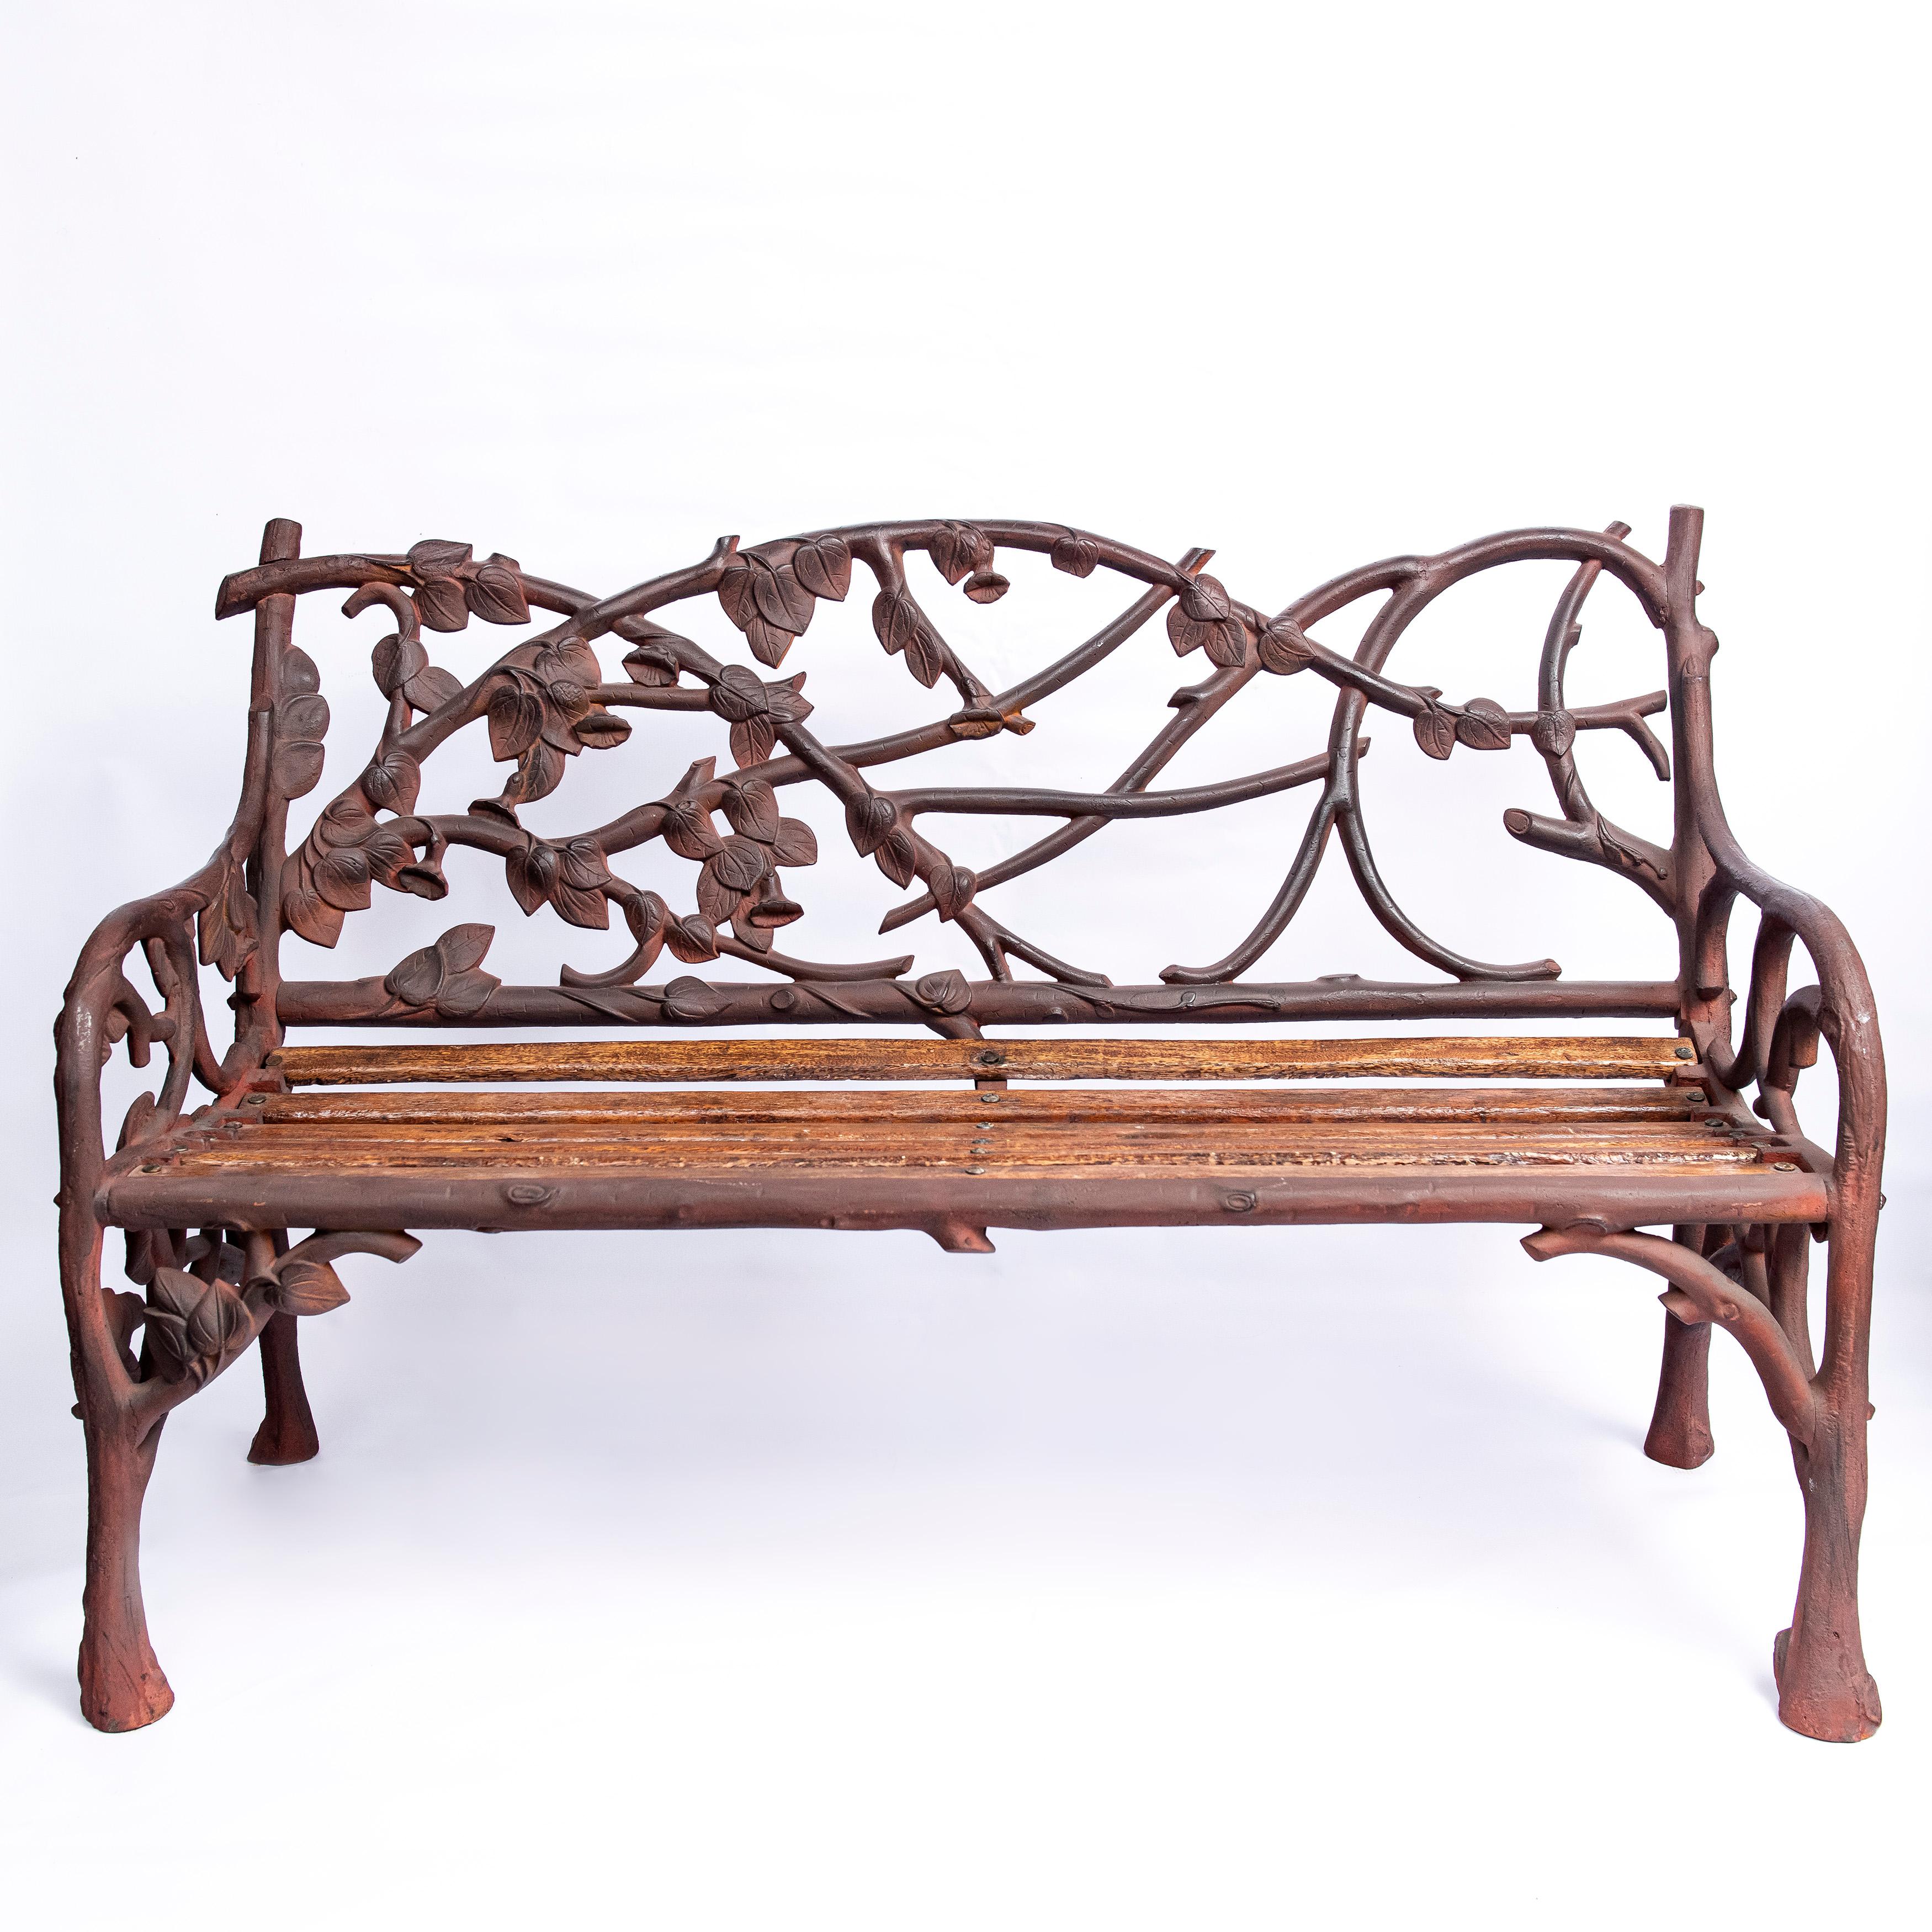 Cast iron and wood garden furniture set. Art Nouveau style, England, late 19th century.

Large armchair dimensions: 127 cm width, 63 cm depth, 83 cm height.
Individual armchairs: 56 cm width, 60 cm depth, 90 cm height.